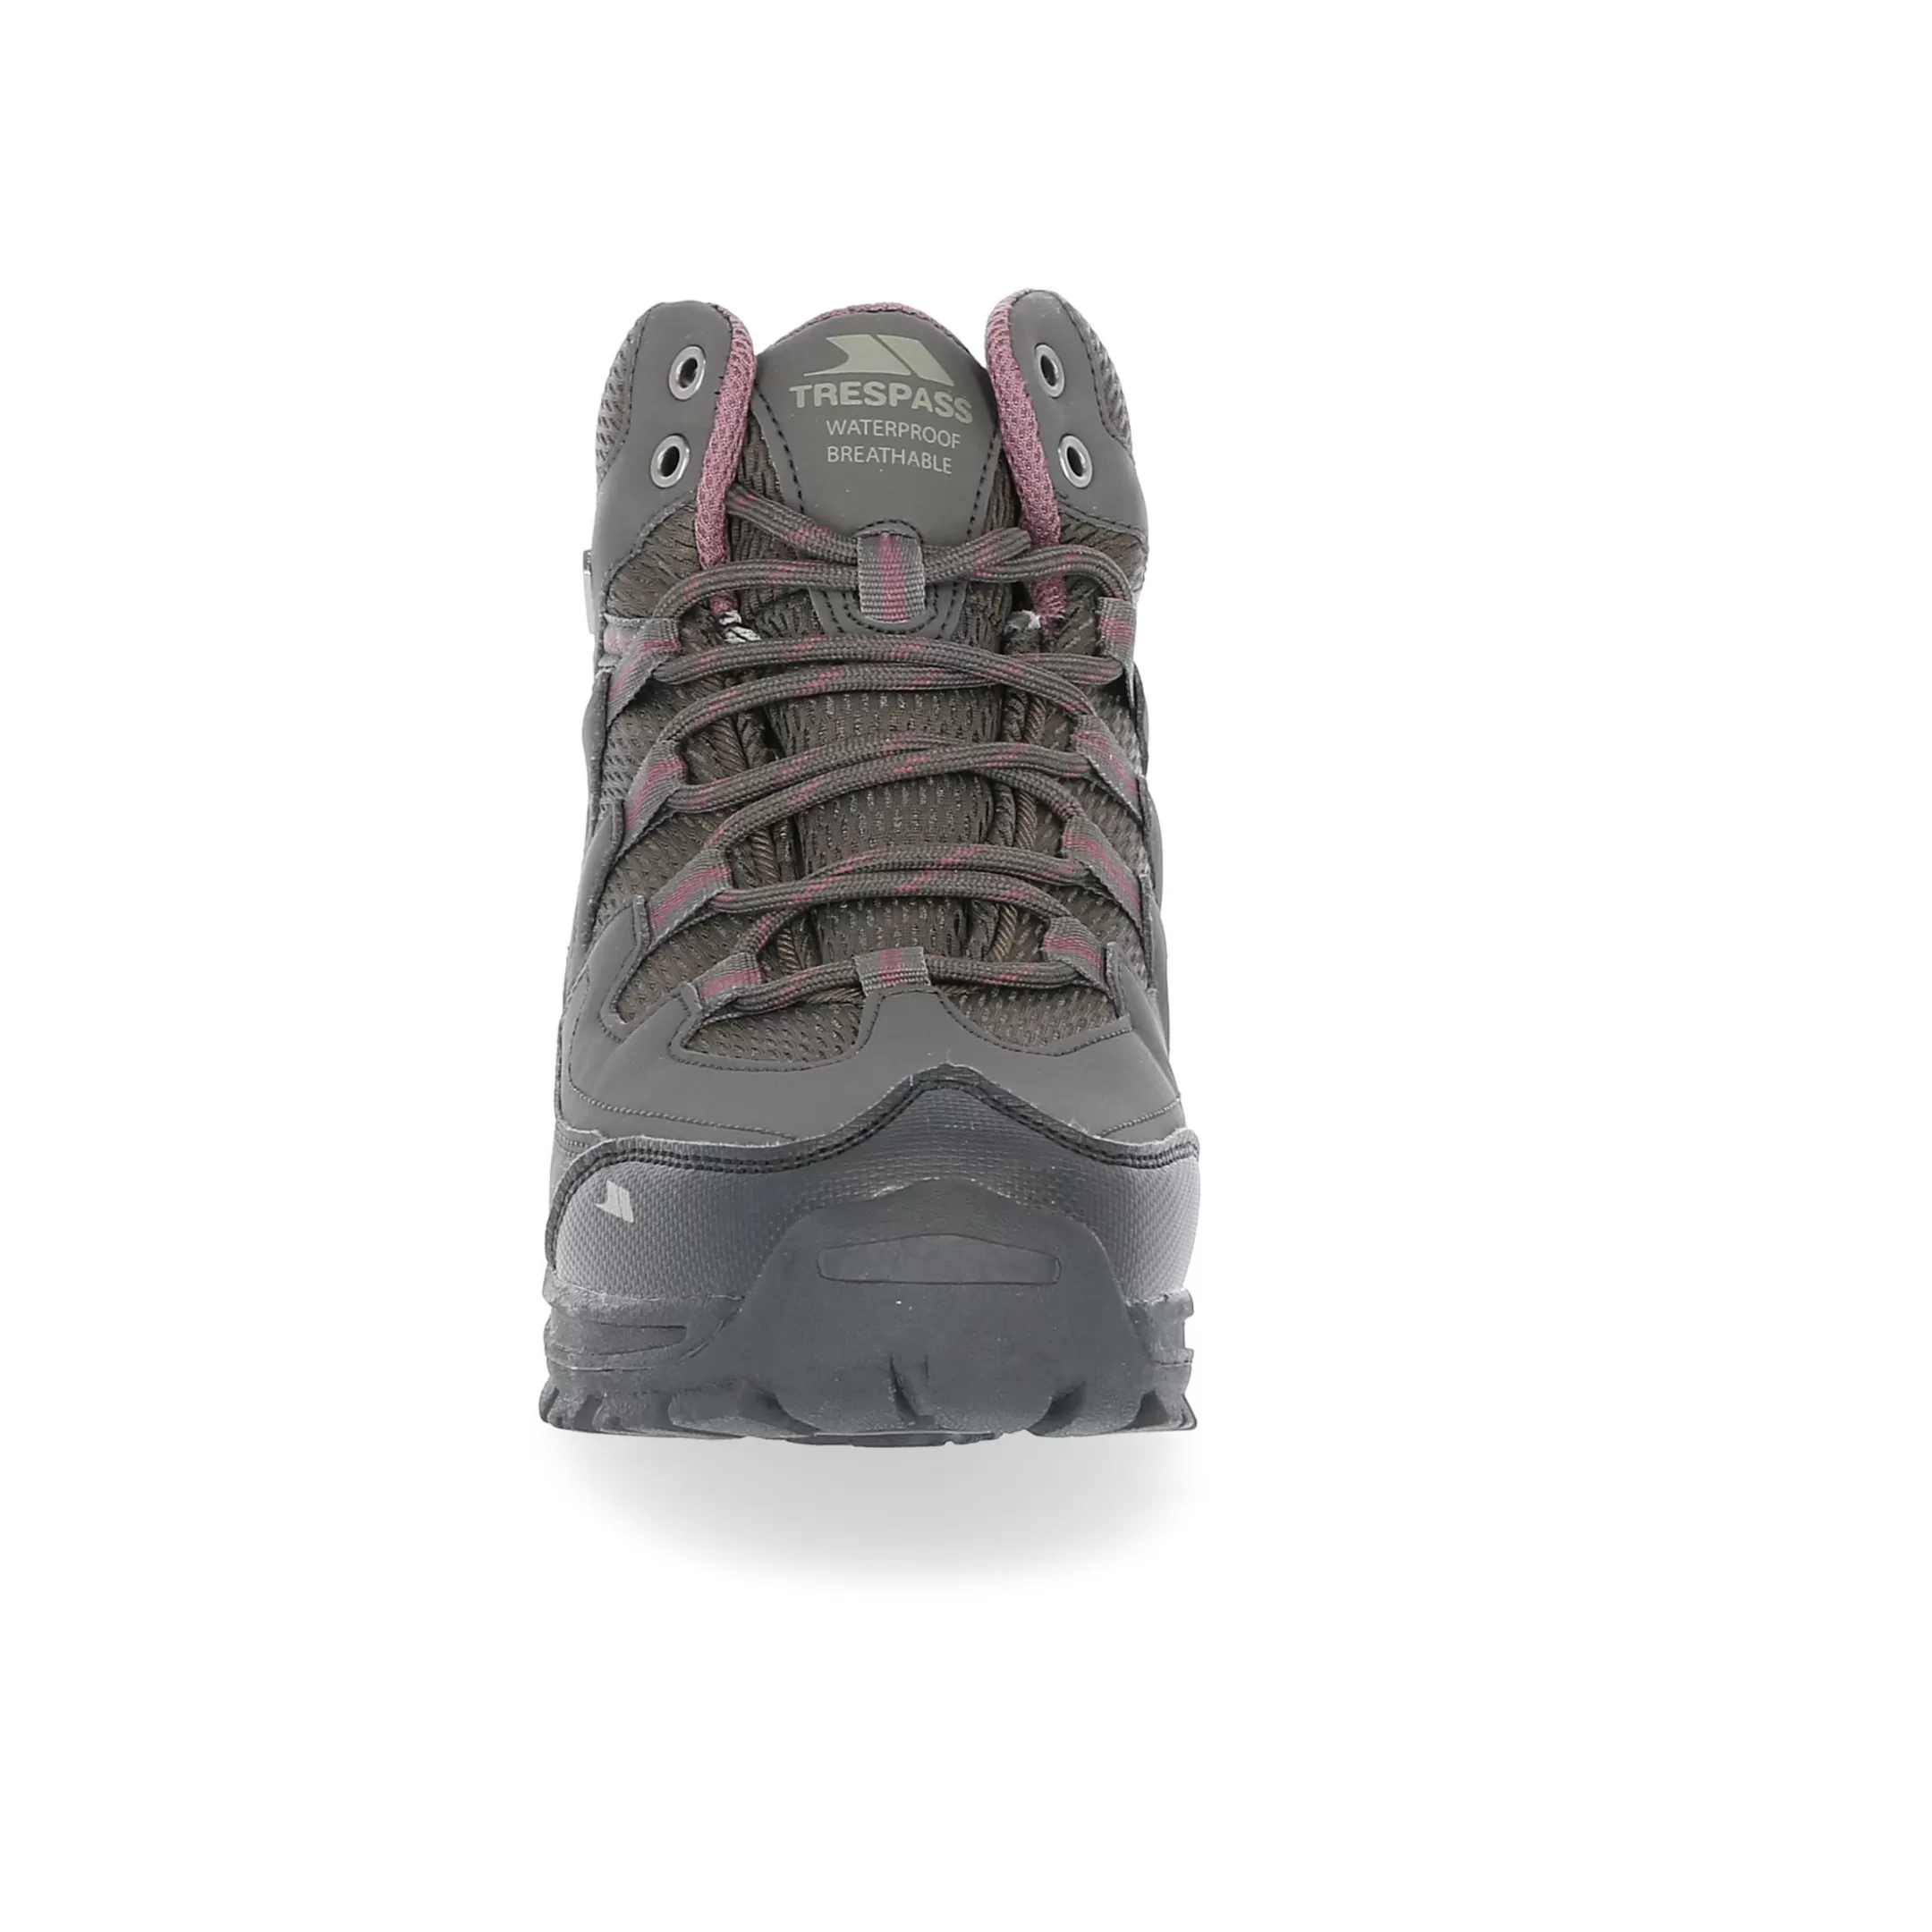 Womens Waterproof Walking Boots Mitzi | Trespass New